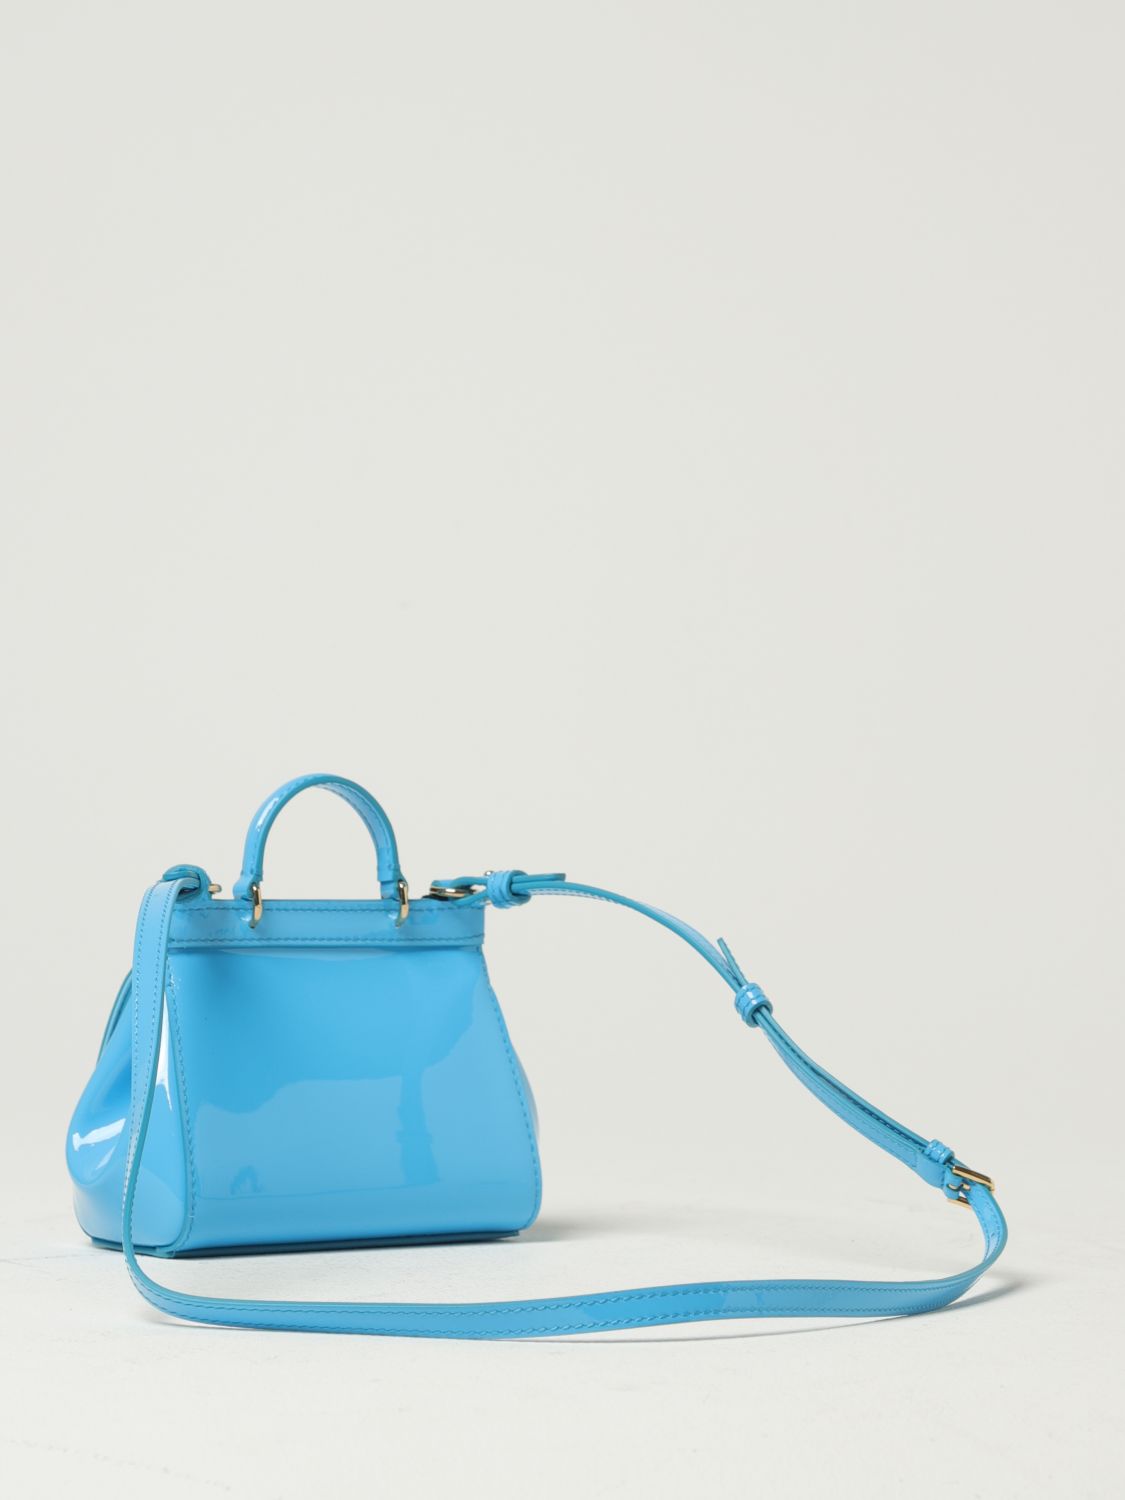 DOLCE & GABBANA: Sicily bag in patent leather - Milk  Dolce & Gabbana  clutch EB0003A1067 online at